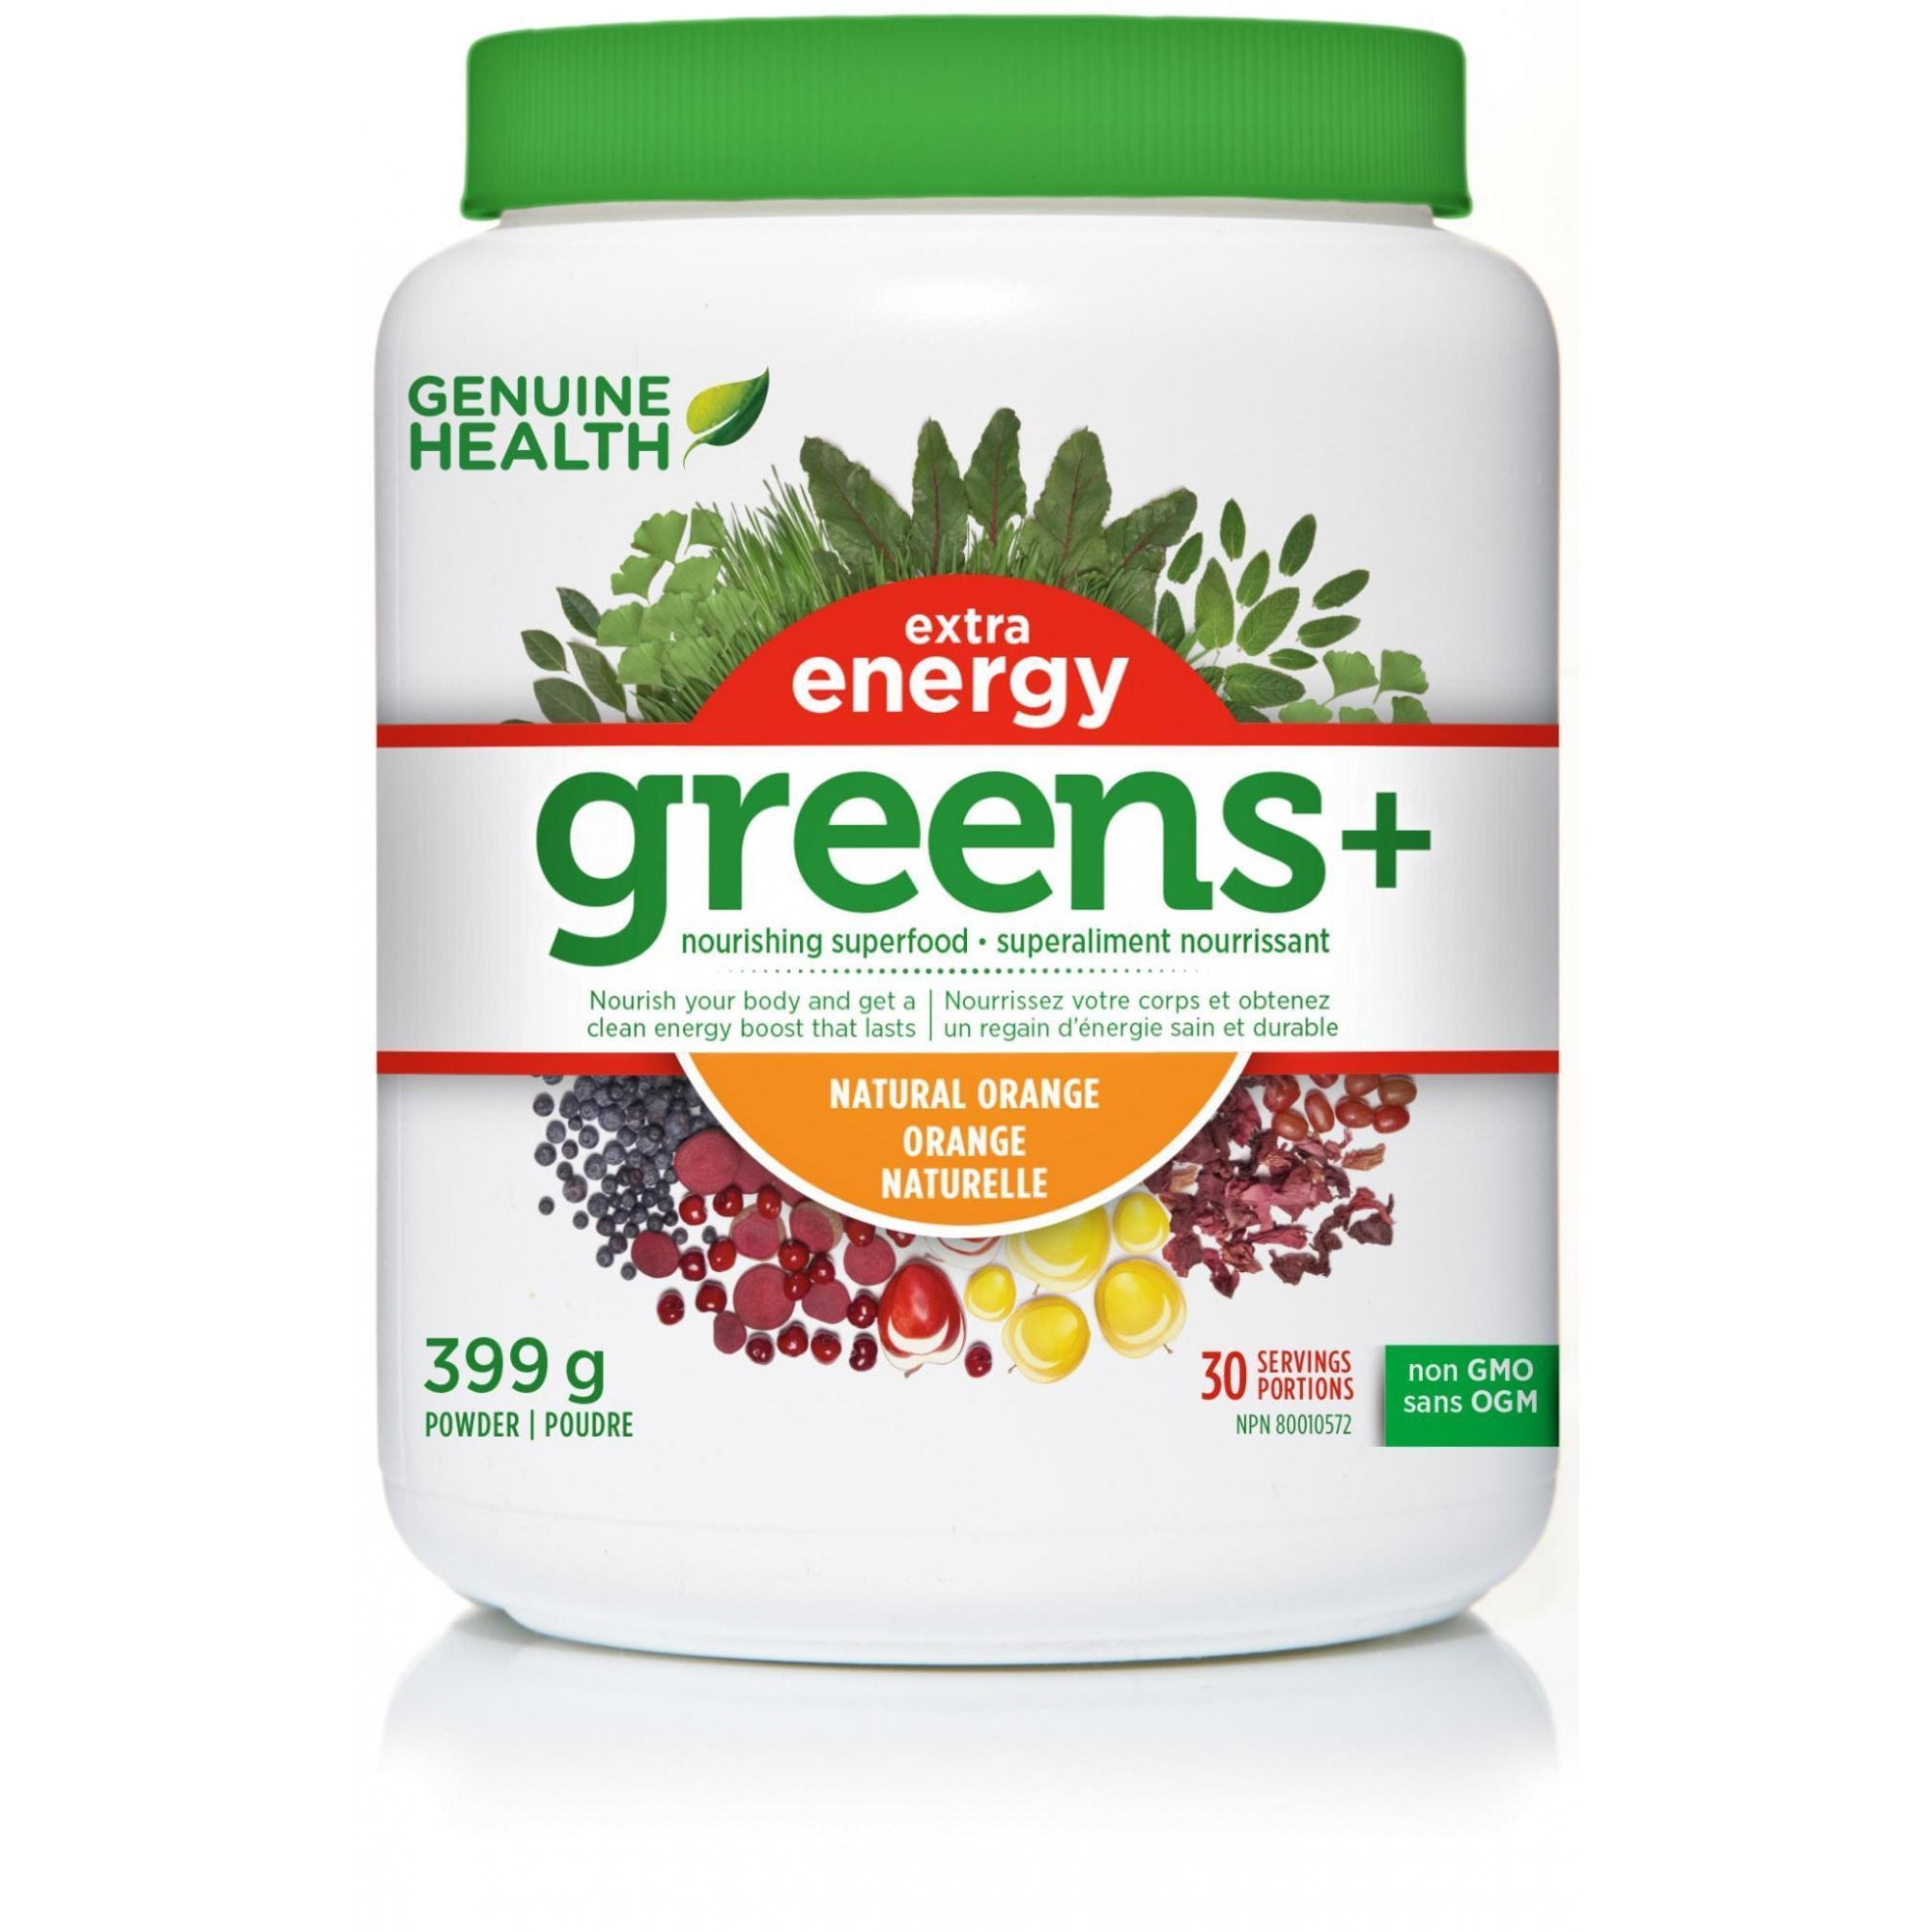 Genuine Health Greens+ Extra Energy 399g Greens Natural Orange Genuine Health